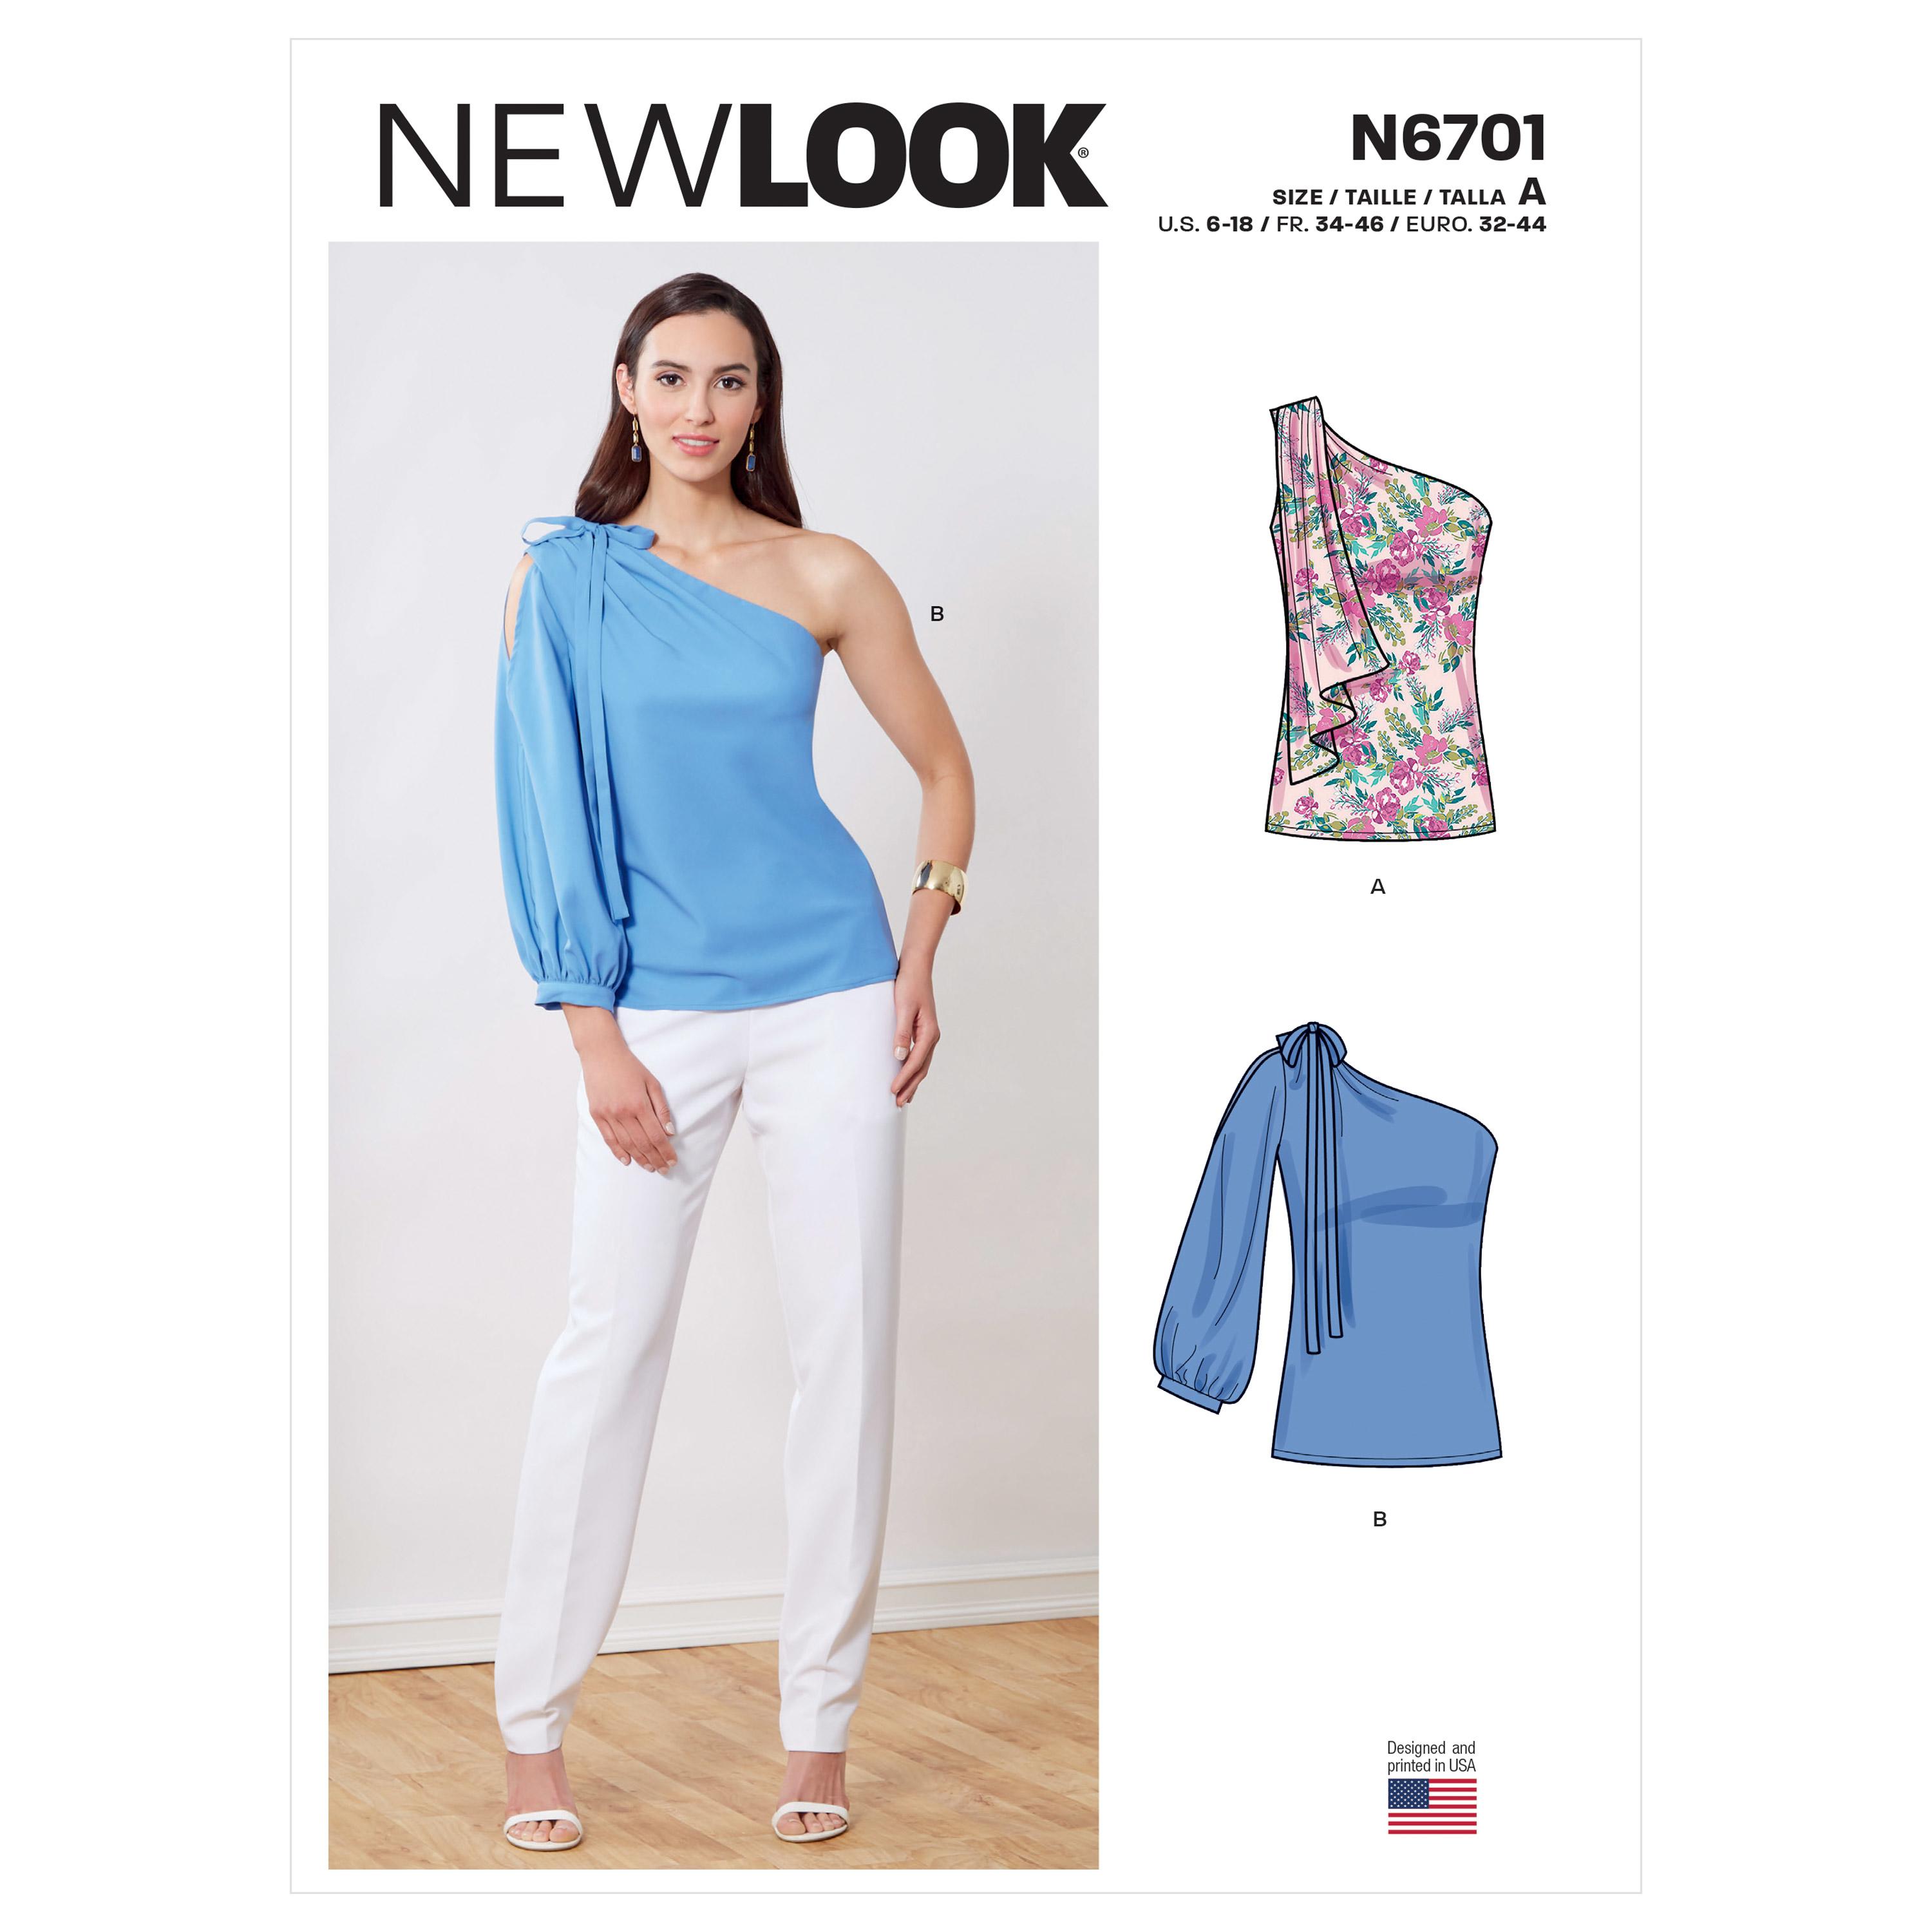 New Look Sewing Pattern N6701 Misses' Set of One-Shoulder Tops